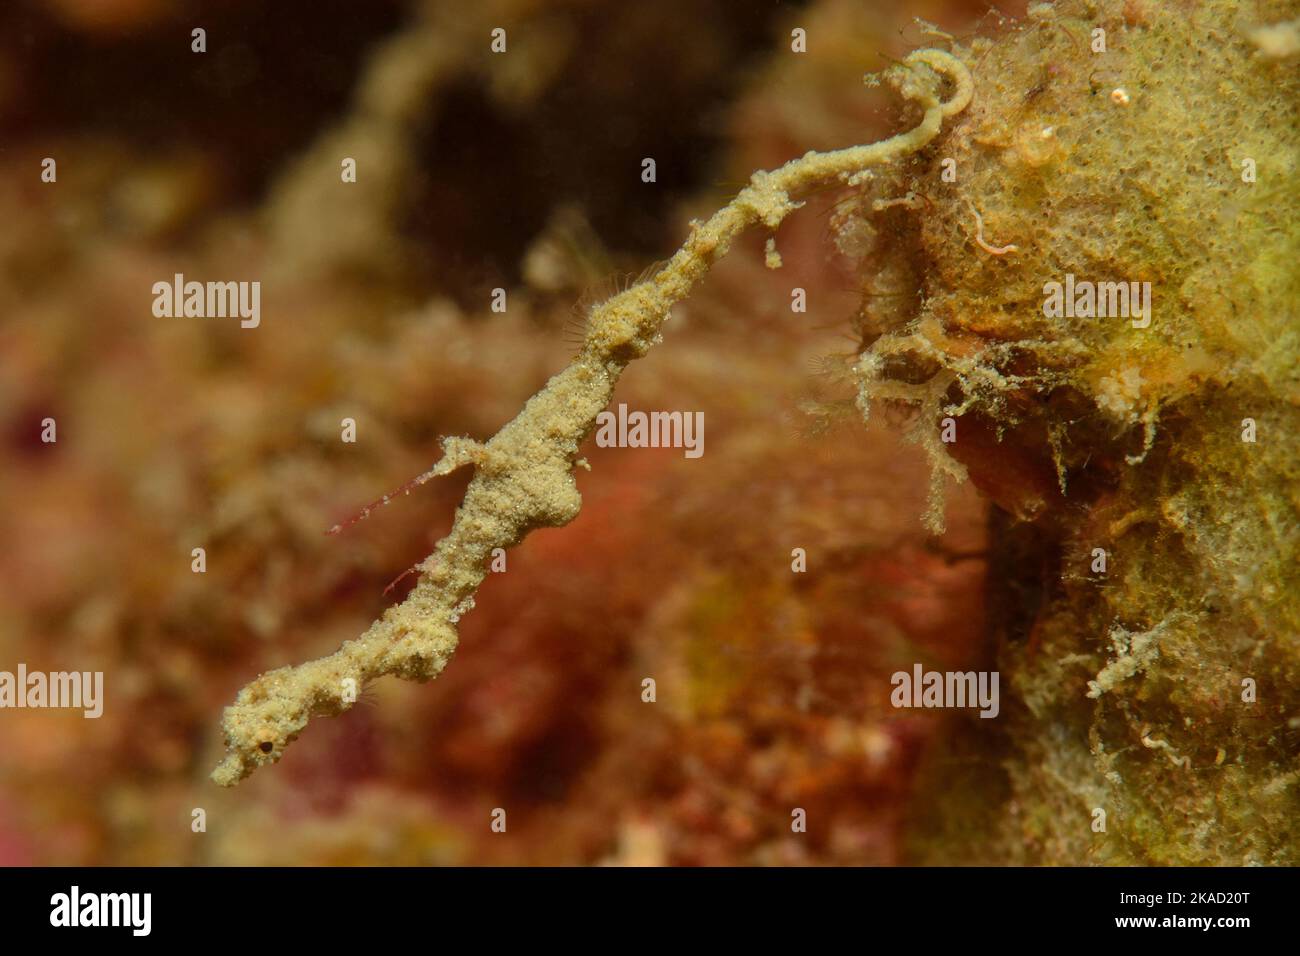 Kyonemichthys rumengani, Zwerg-Seenadel, Rumengans-Zwergseenadel, thread pipefish, Rumengan's Pipehorse, Lembeh Seadragon Stock Photo